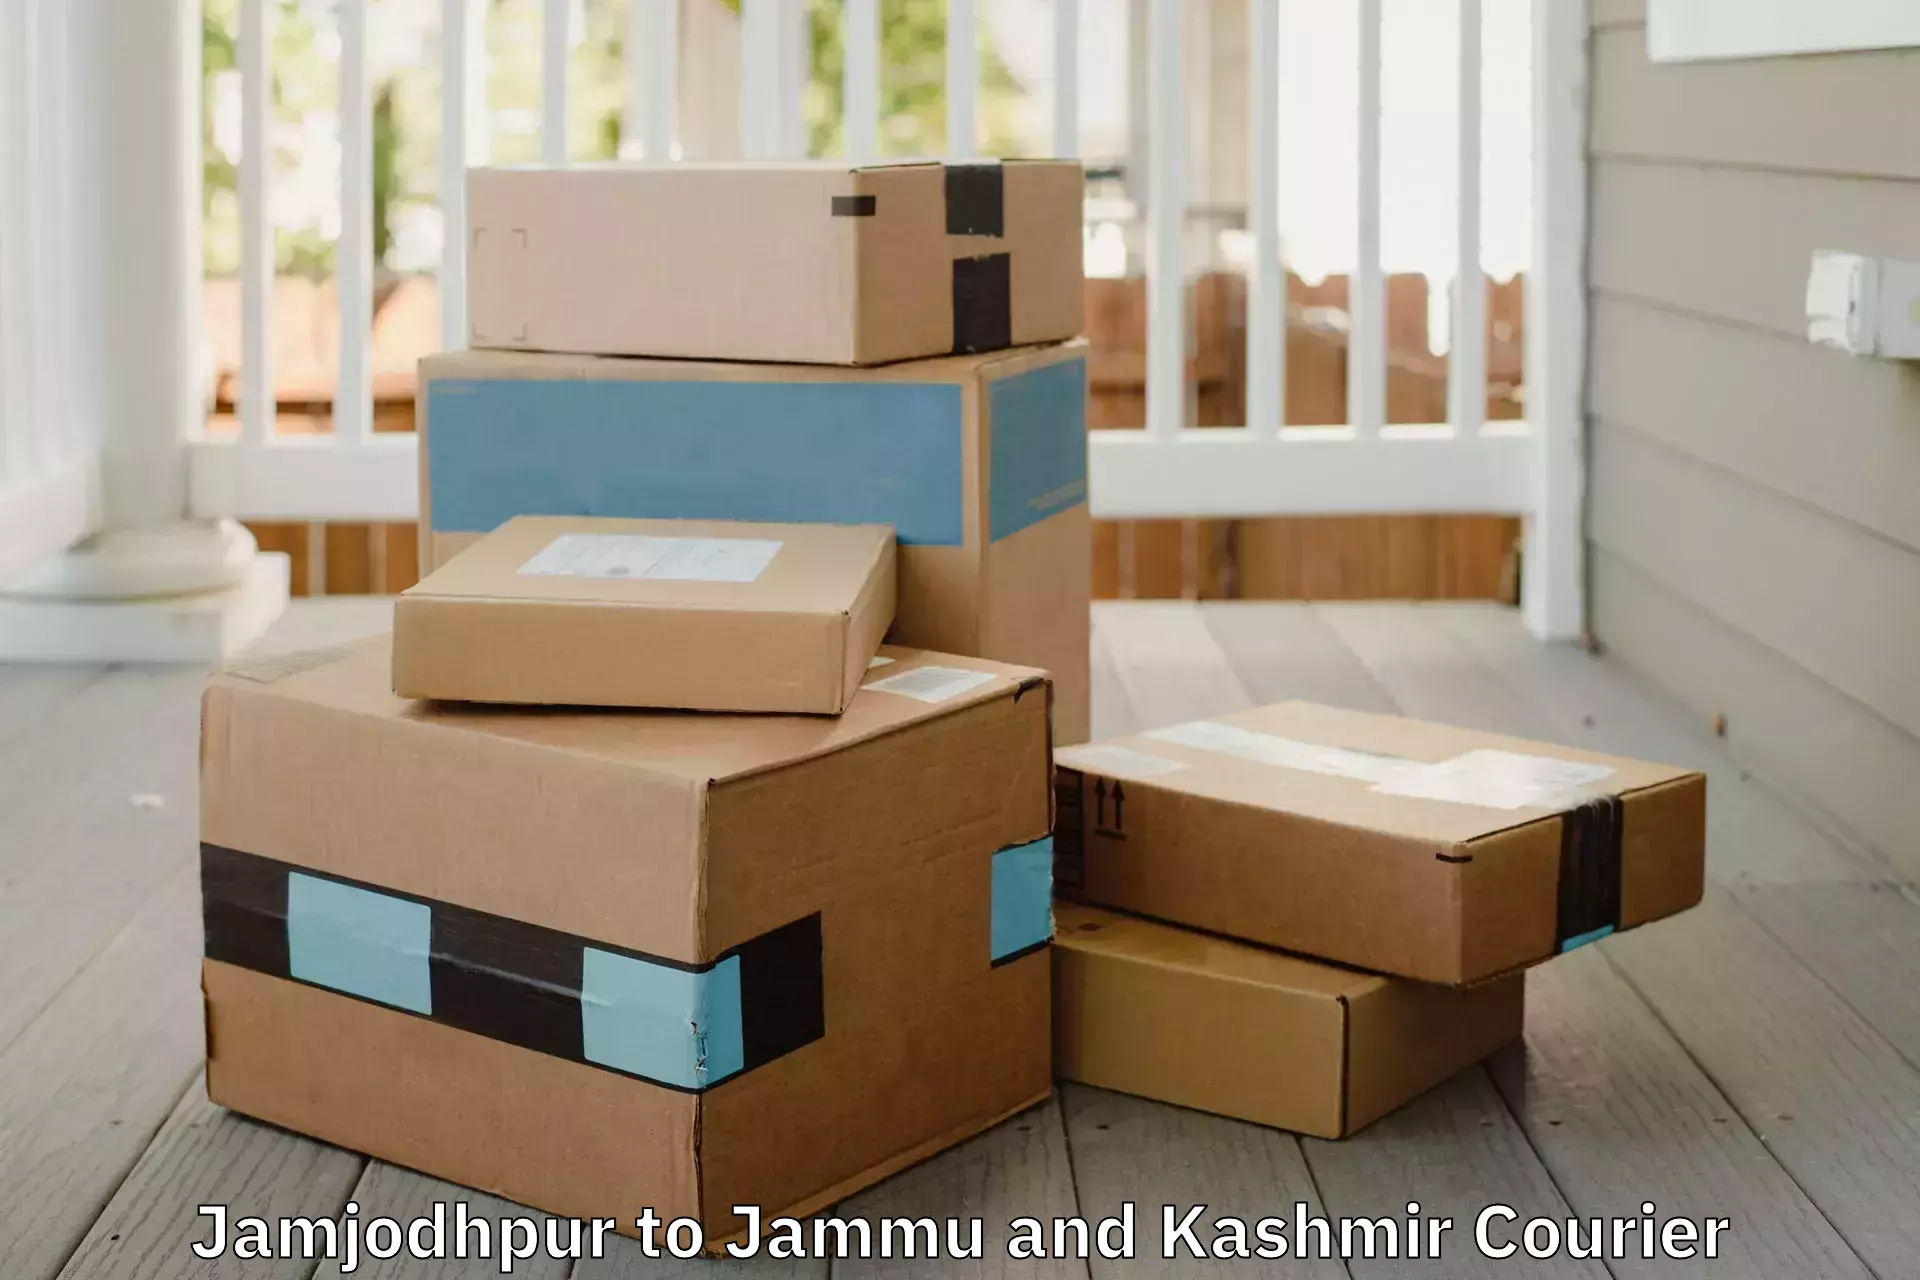 Moving and handling services Jamjodhpur to Jammu and Kashmir